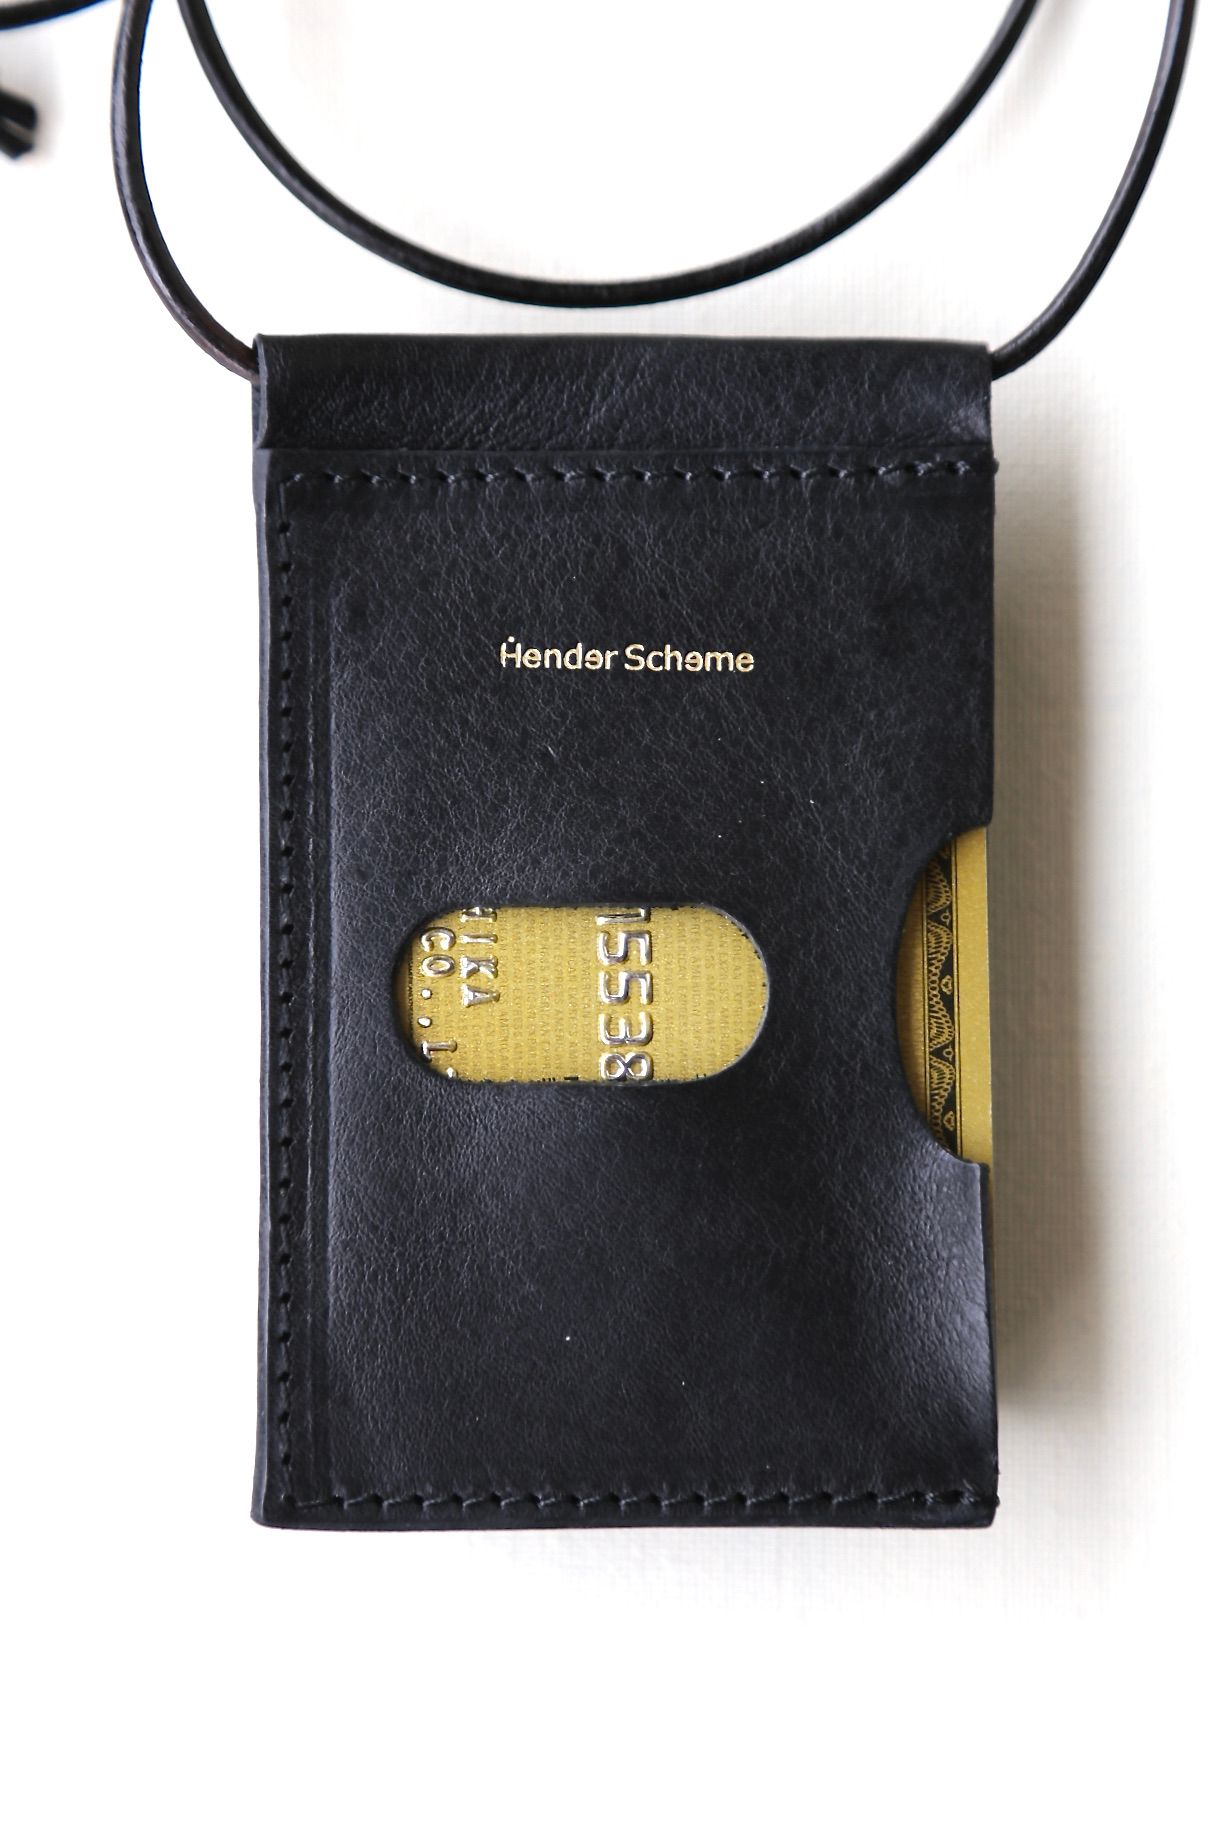 Hender Scheme - エンダースキーマ 財布 hang wallet(nc-rc-hwl